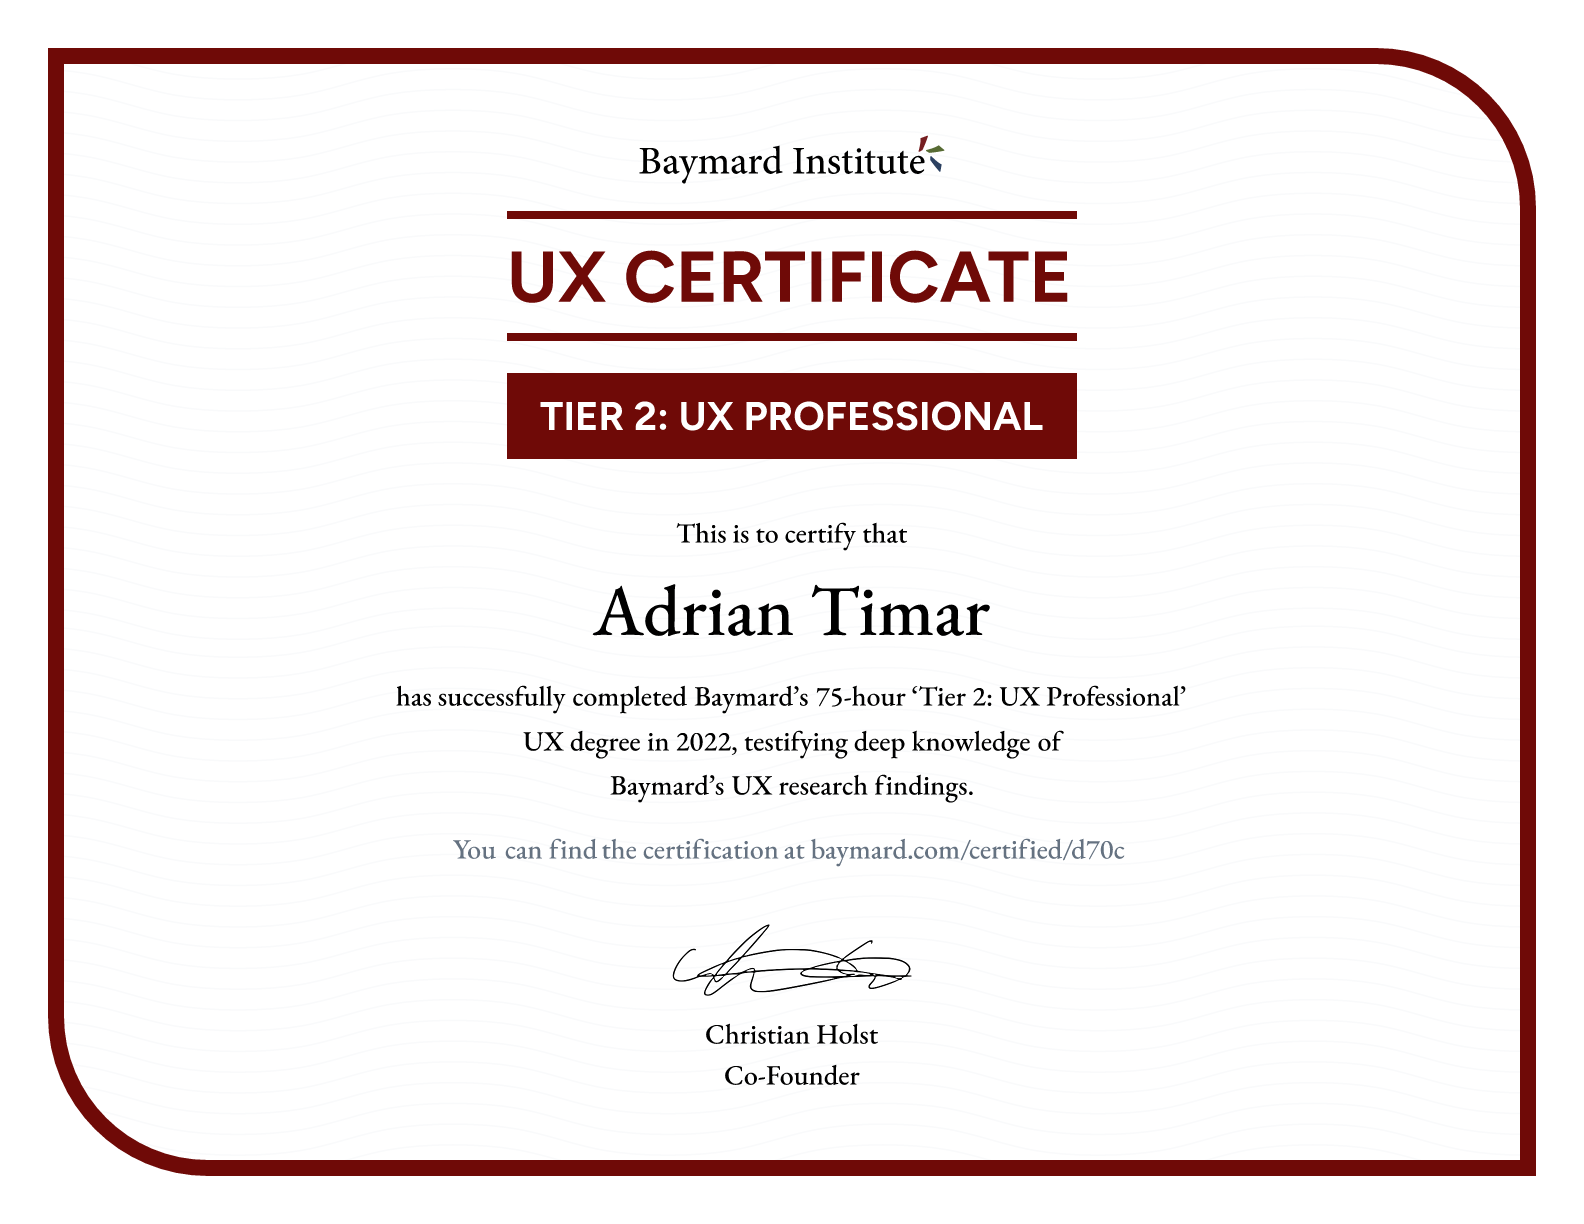 Adrian Timar’s certificate